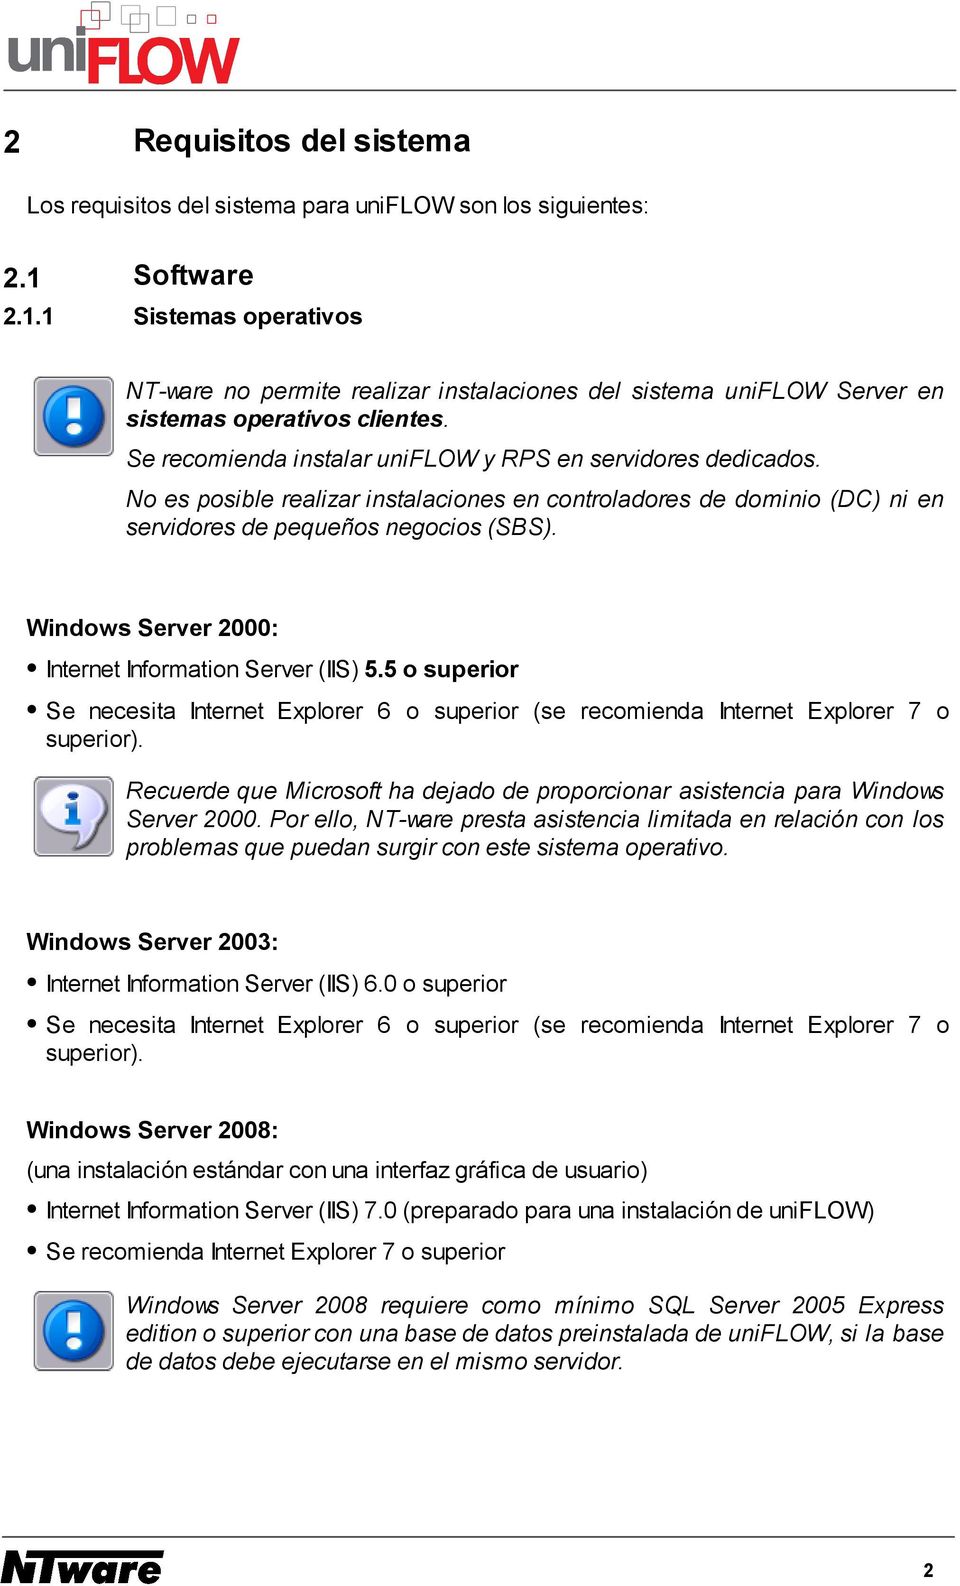 Windows Server 2000: Internet Information Server (IIS) 5.5 o superior Se necesita Internet Explorer 6 o superior (se recomienda Internet Explorer 7 o superior).